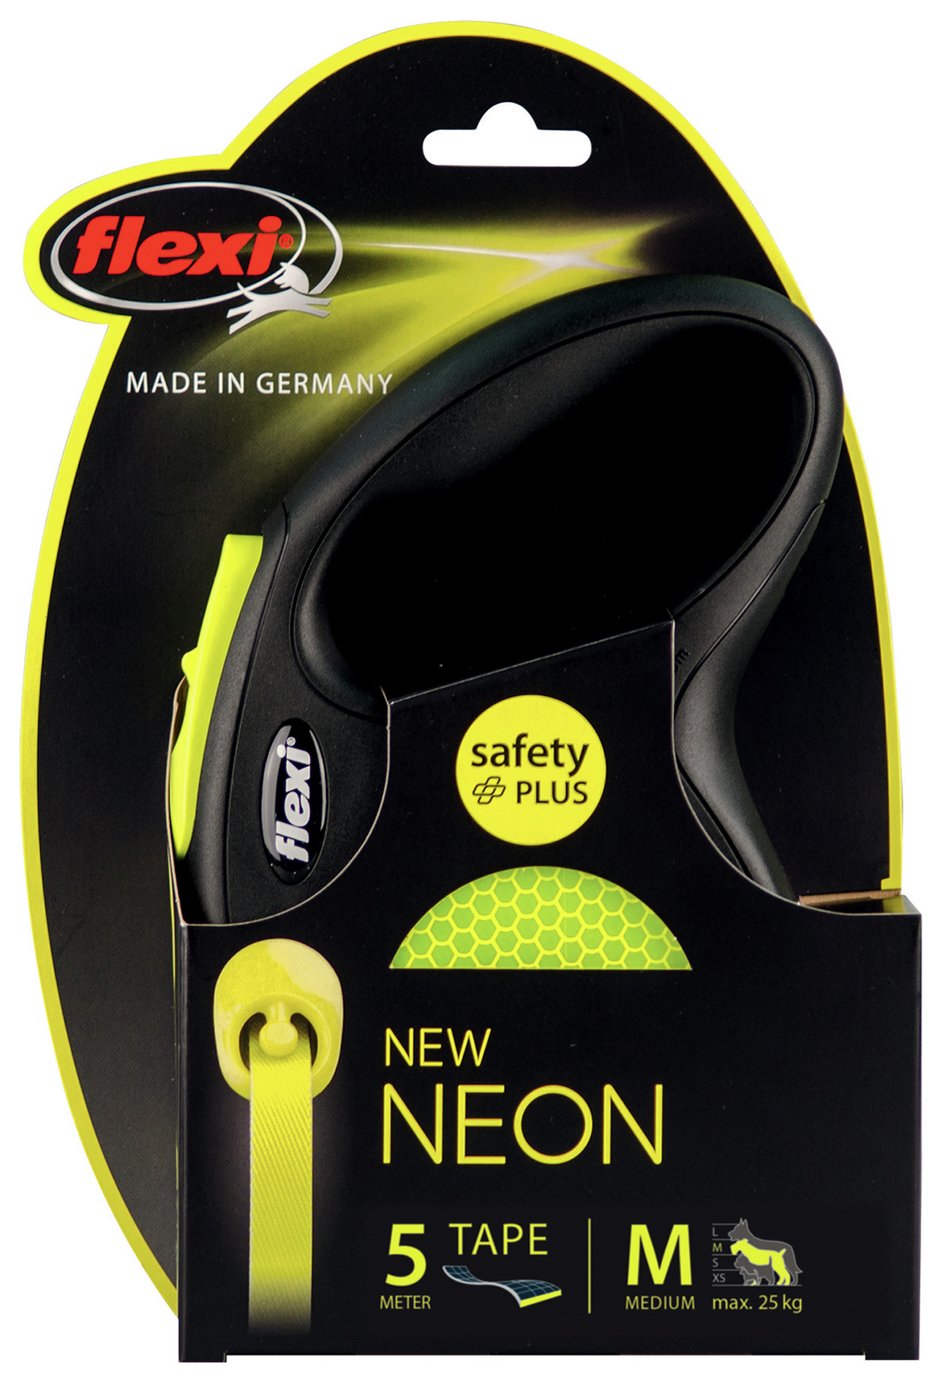 flexi neon tape lead